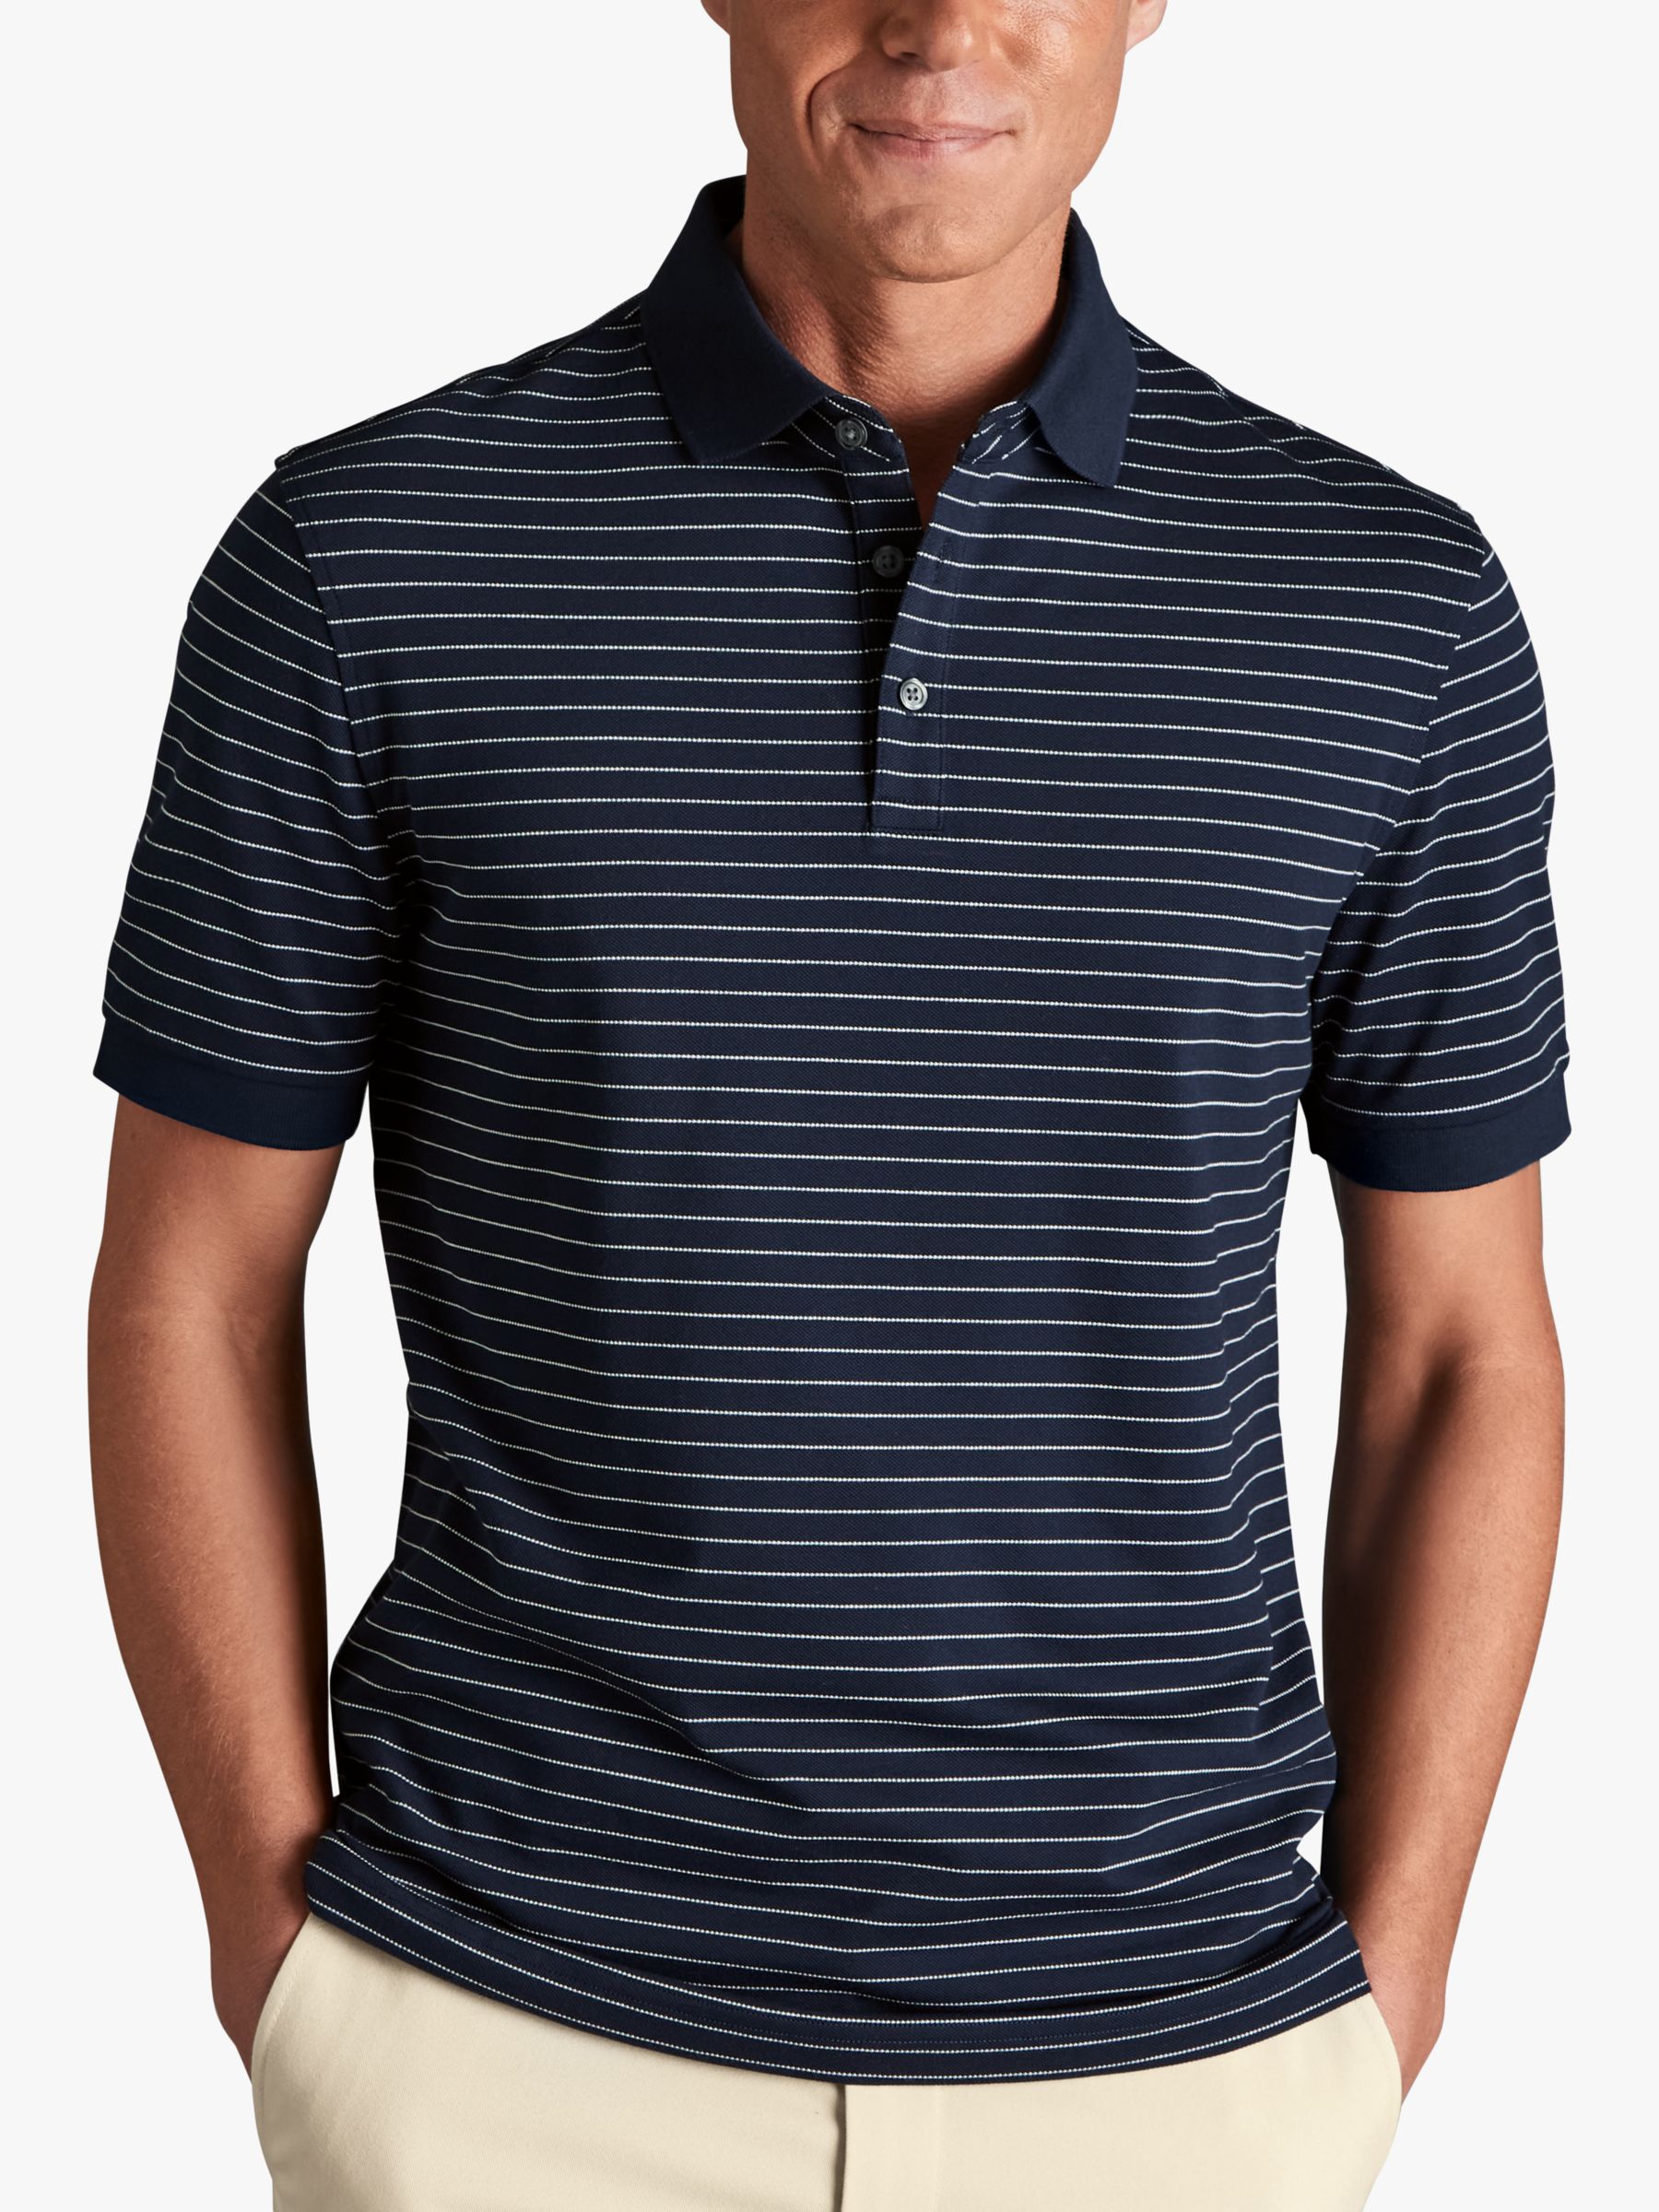 Charles Tyrwhitt Stripe Pique Polo Shirt, Navy & White Pin Stripe at ...